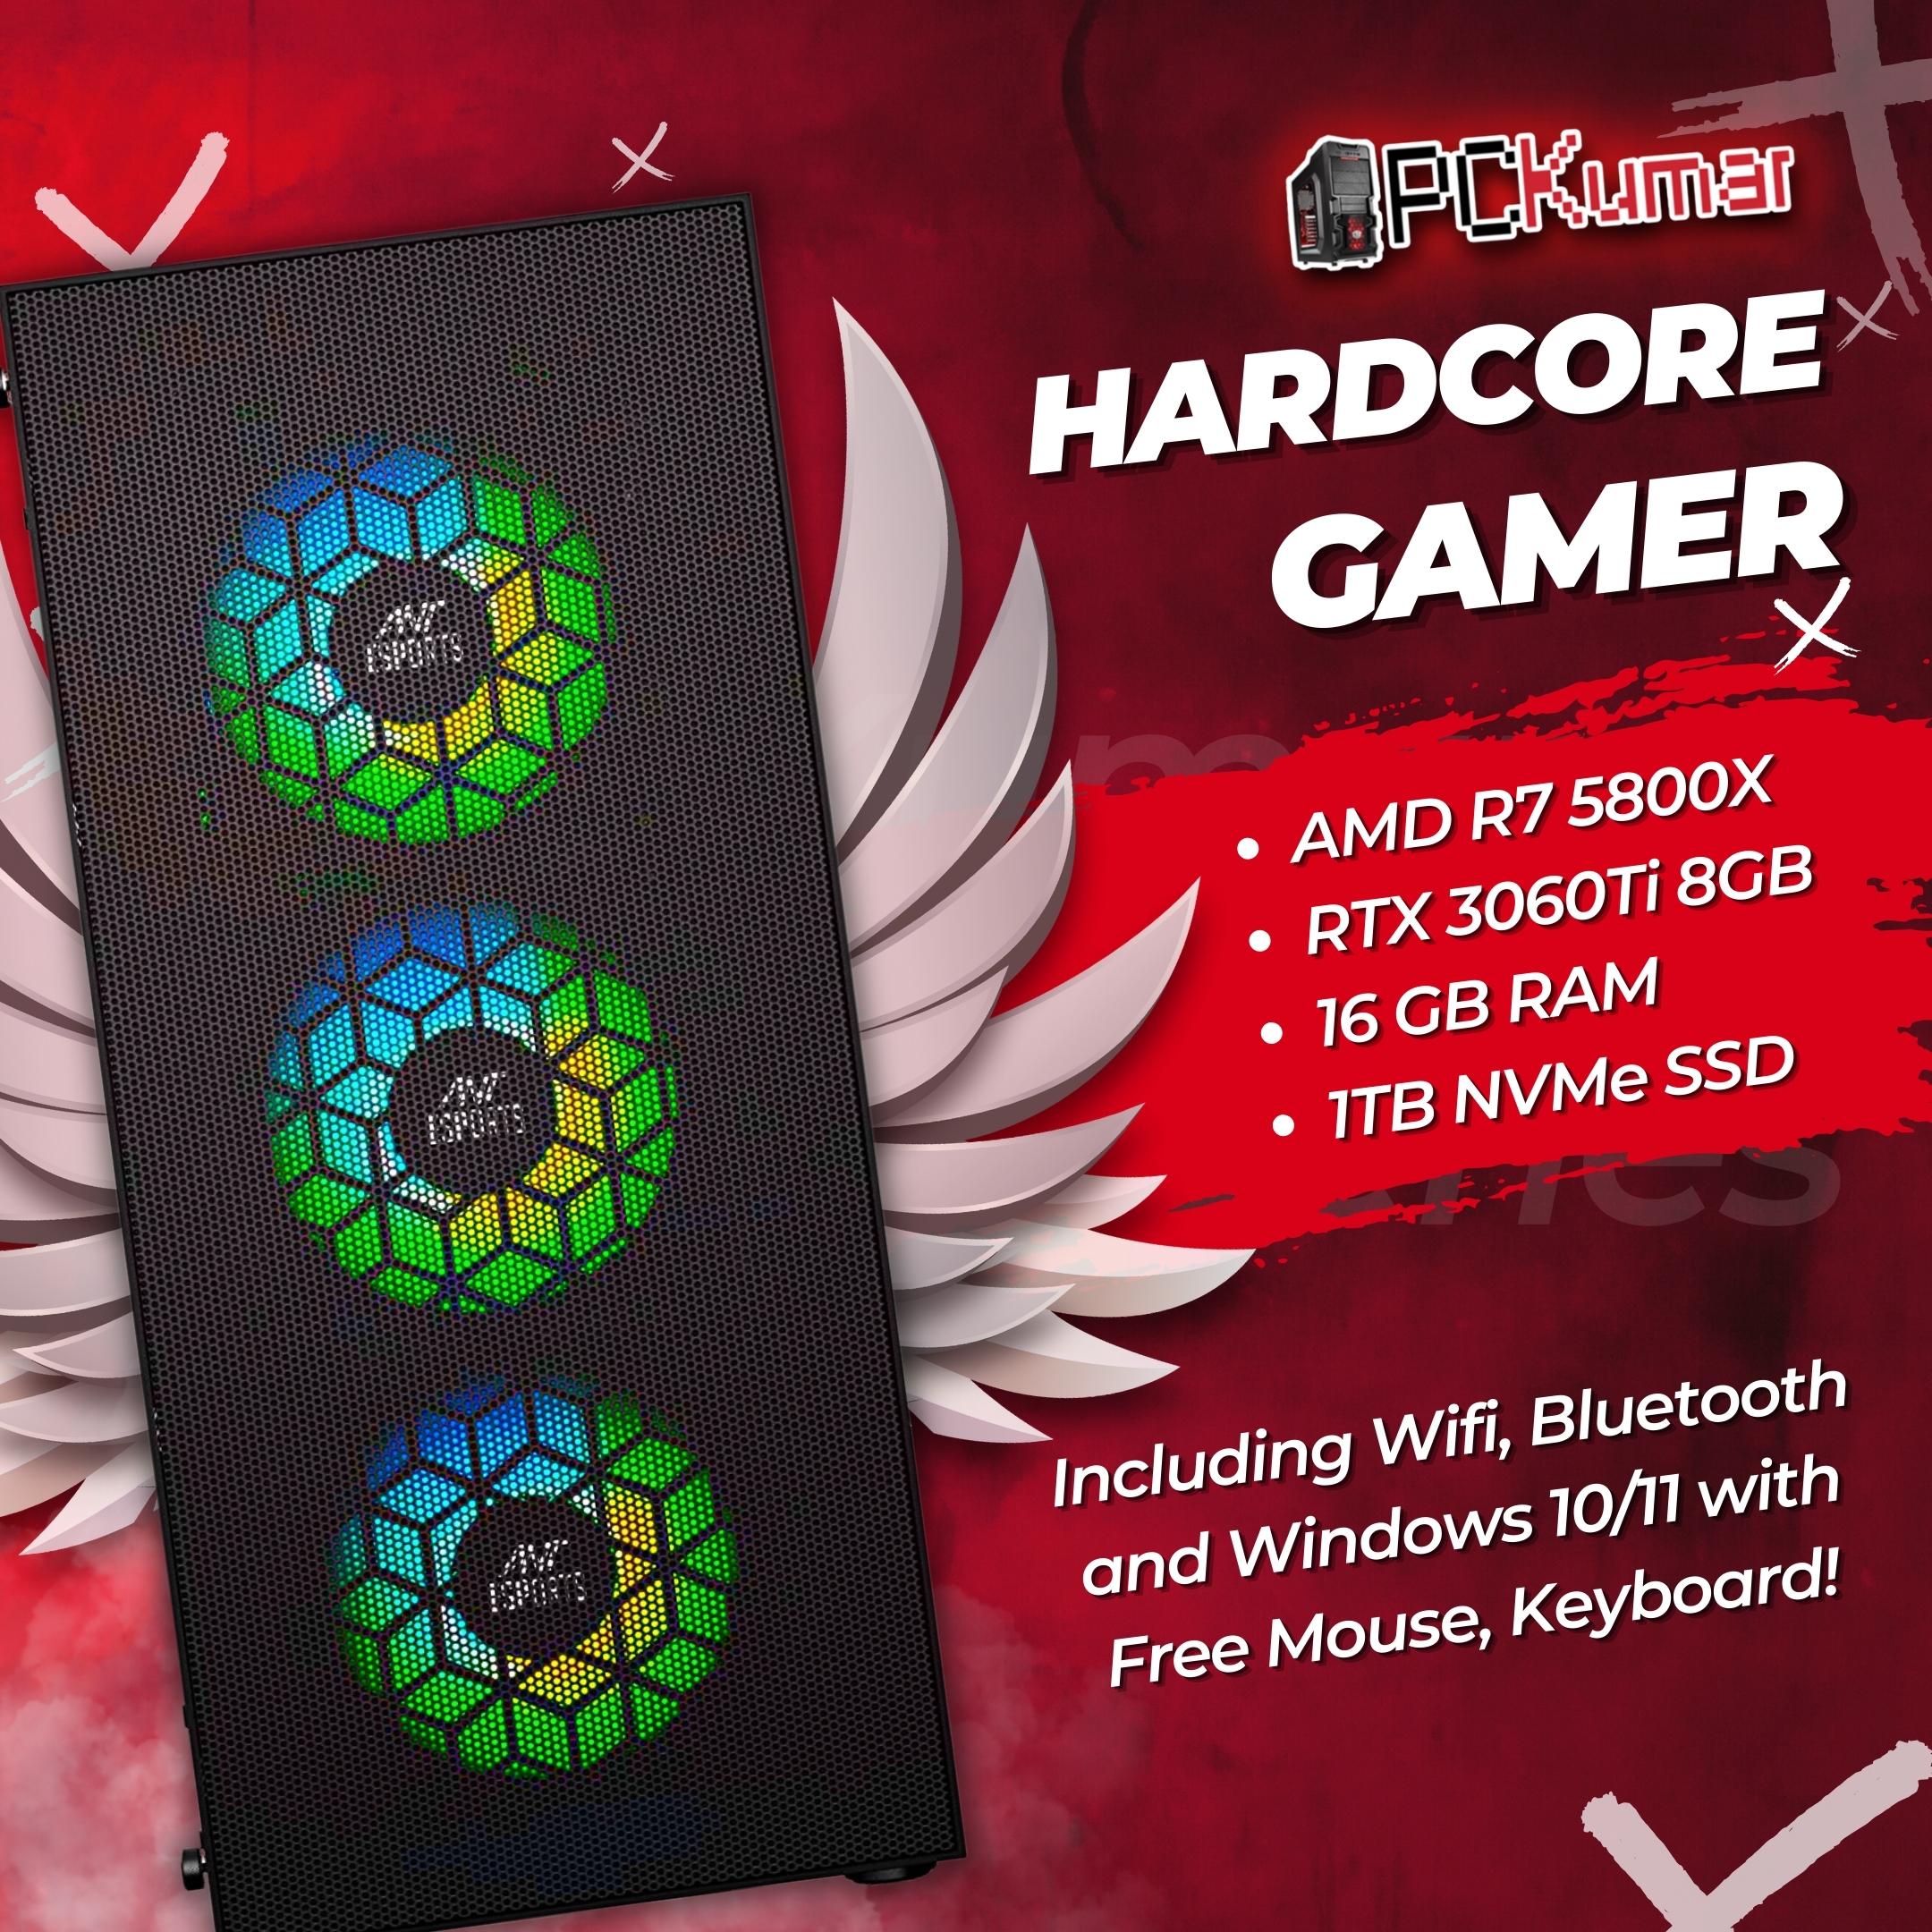 Hardcore Gamer with AMD Ryzen 7 5800X + RTX 3060